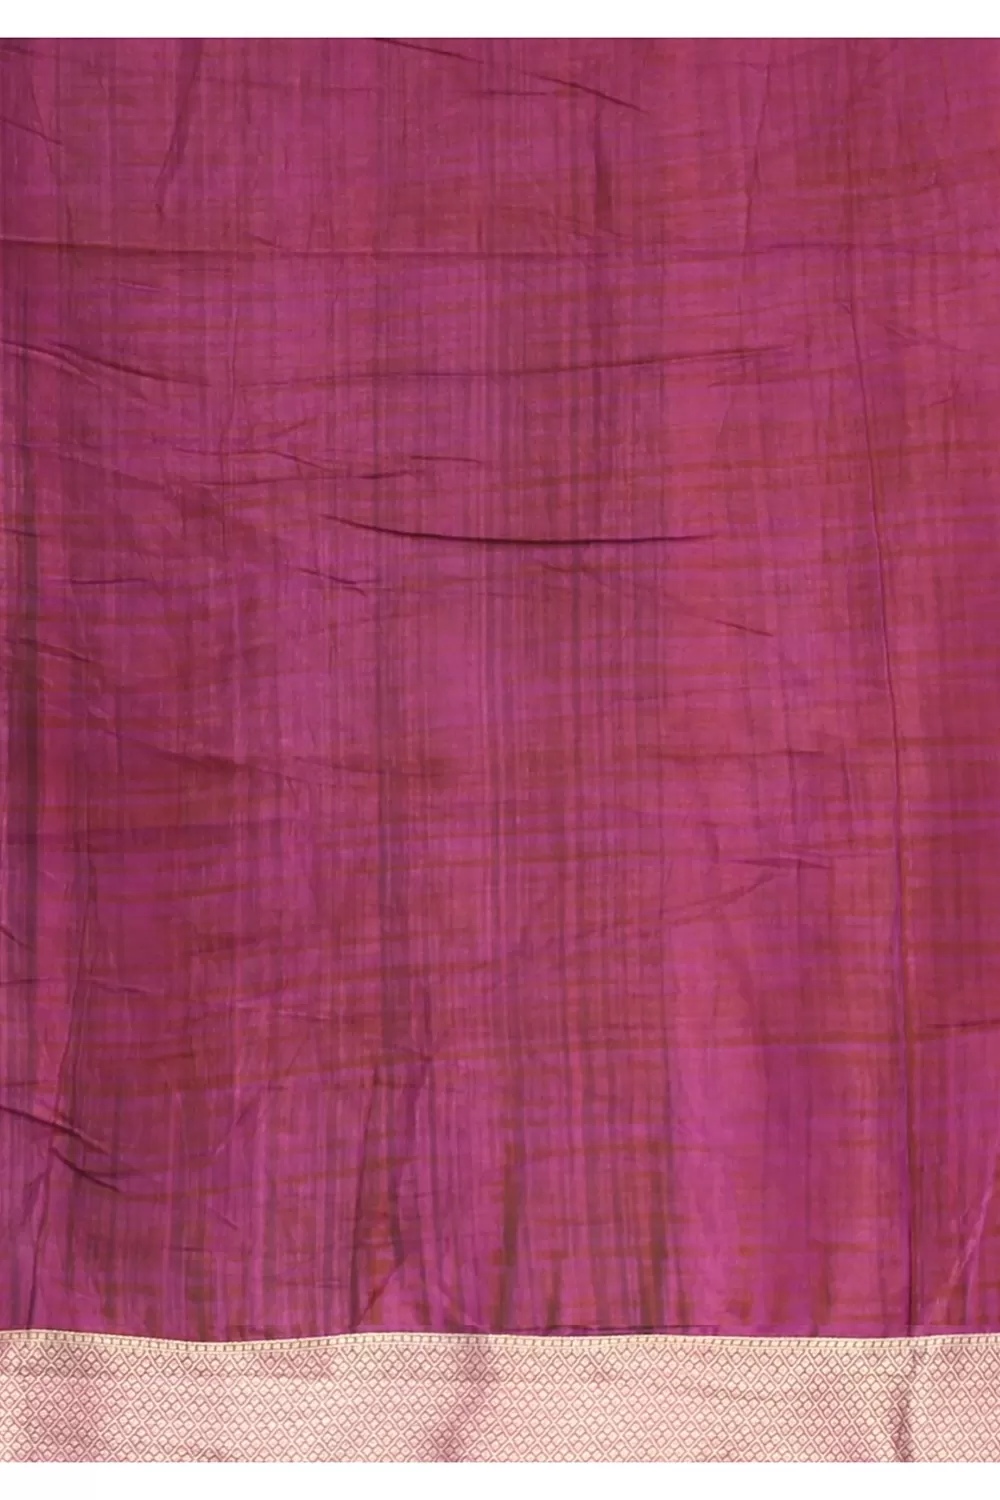 Rose Pink Kanjivaram Soft Silk Saree